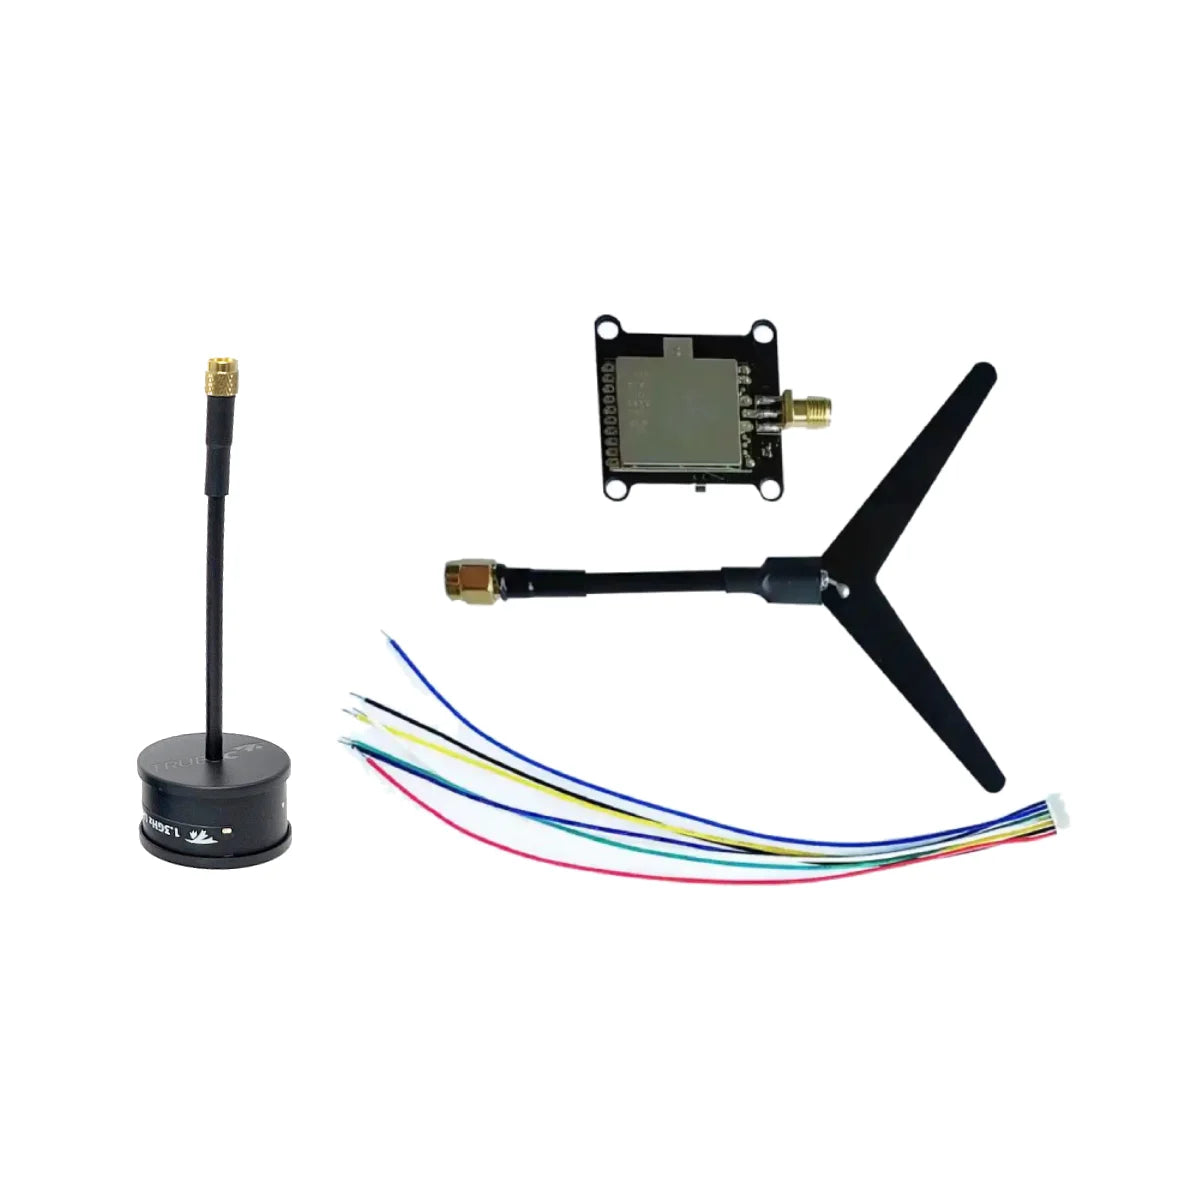 1.2GHz 2000mW 1600mW VTX / VRX-1G3-V2 - Long Range FPV Video Transmitter Receiver for RC Racing Drone Goggles Mateksys Matek Systems